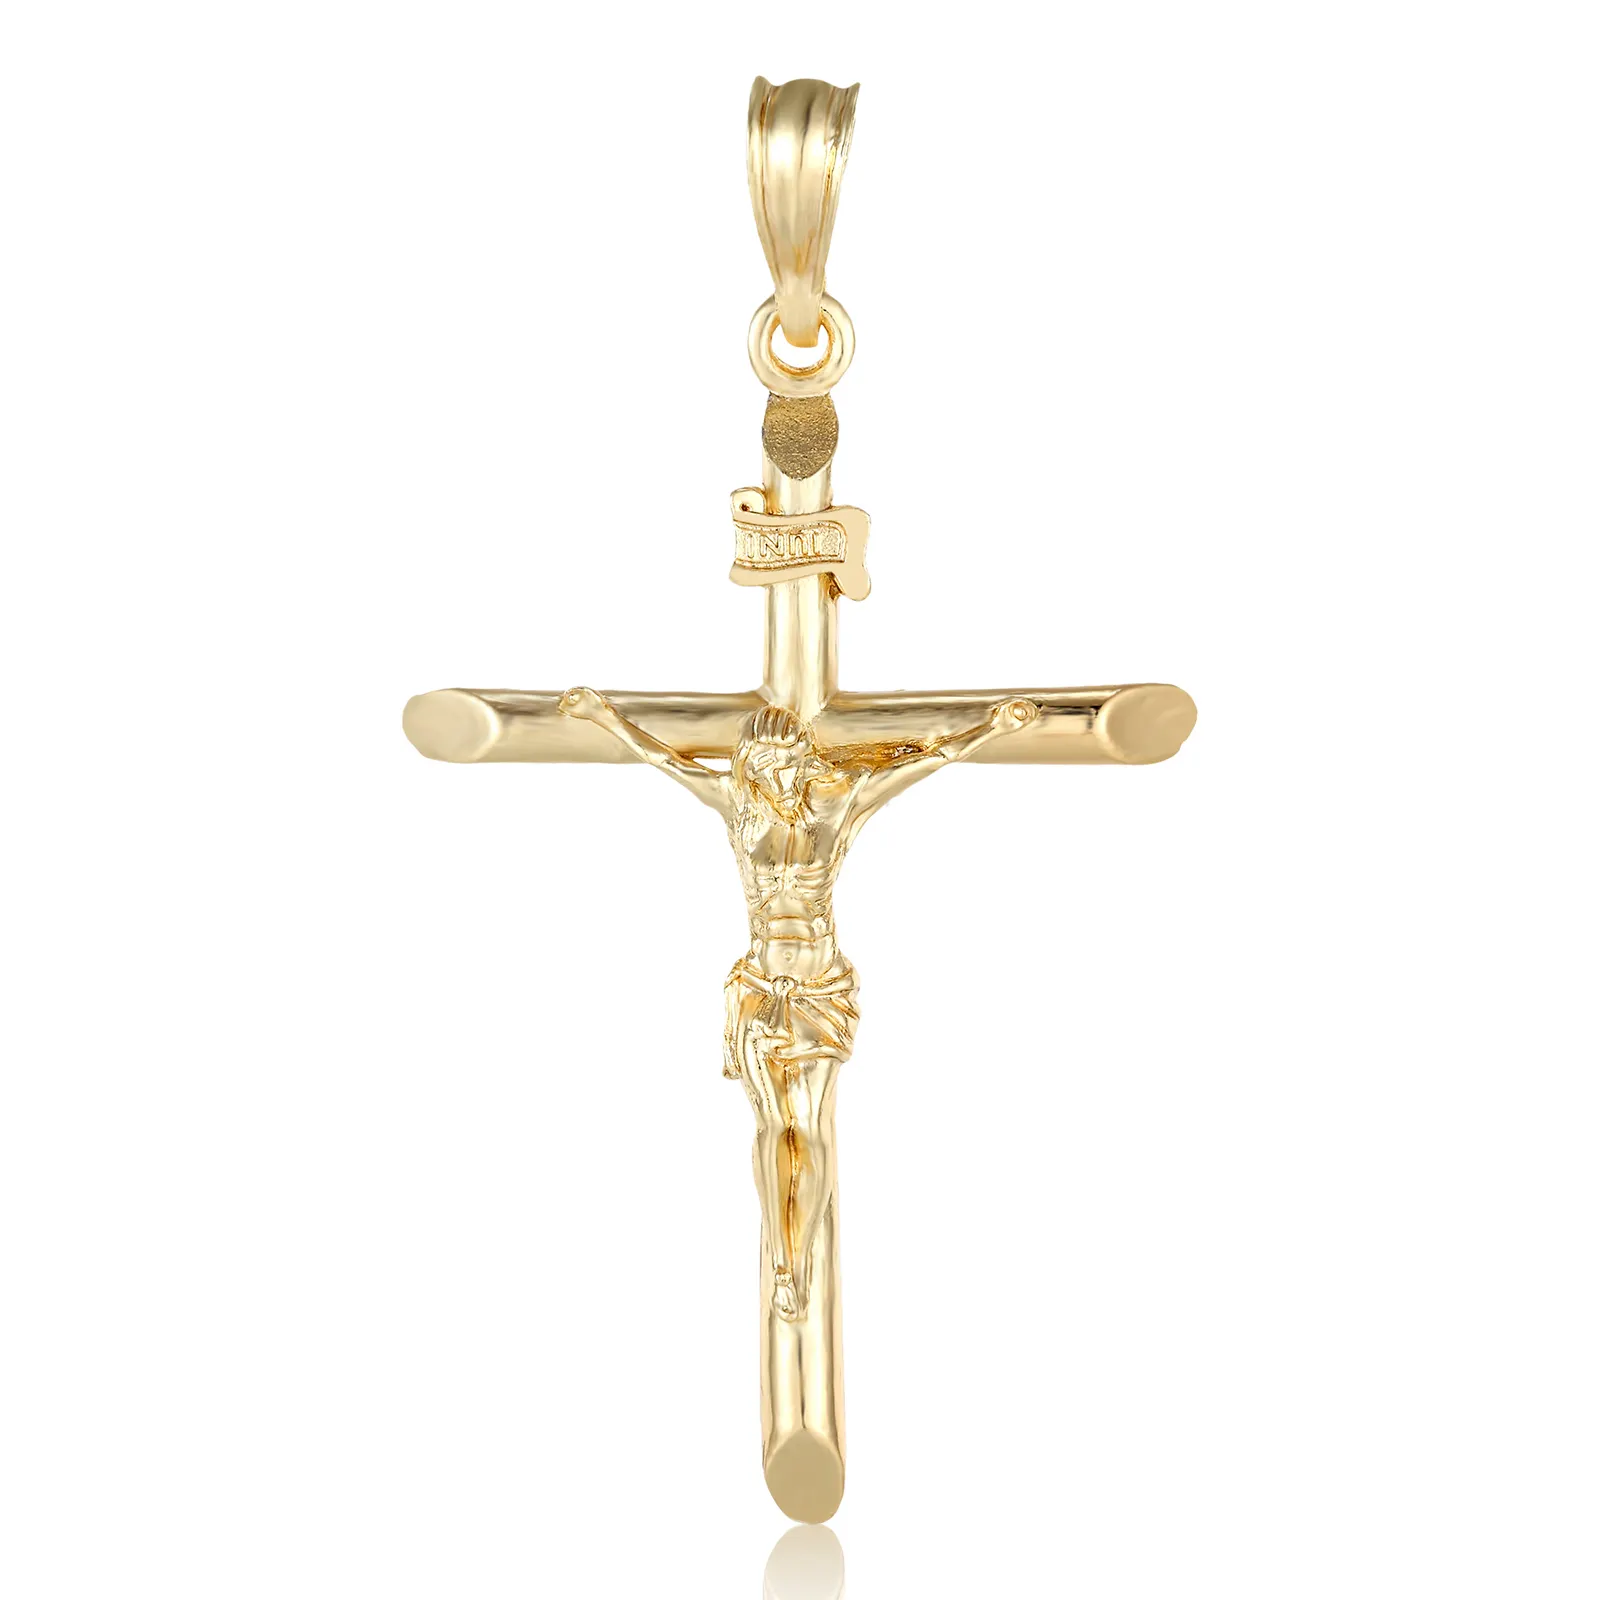 Elfic Fashion jewelry necklace Christian pendant,hot sale 14K gold plating cross pendant